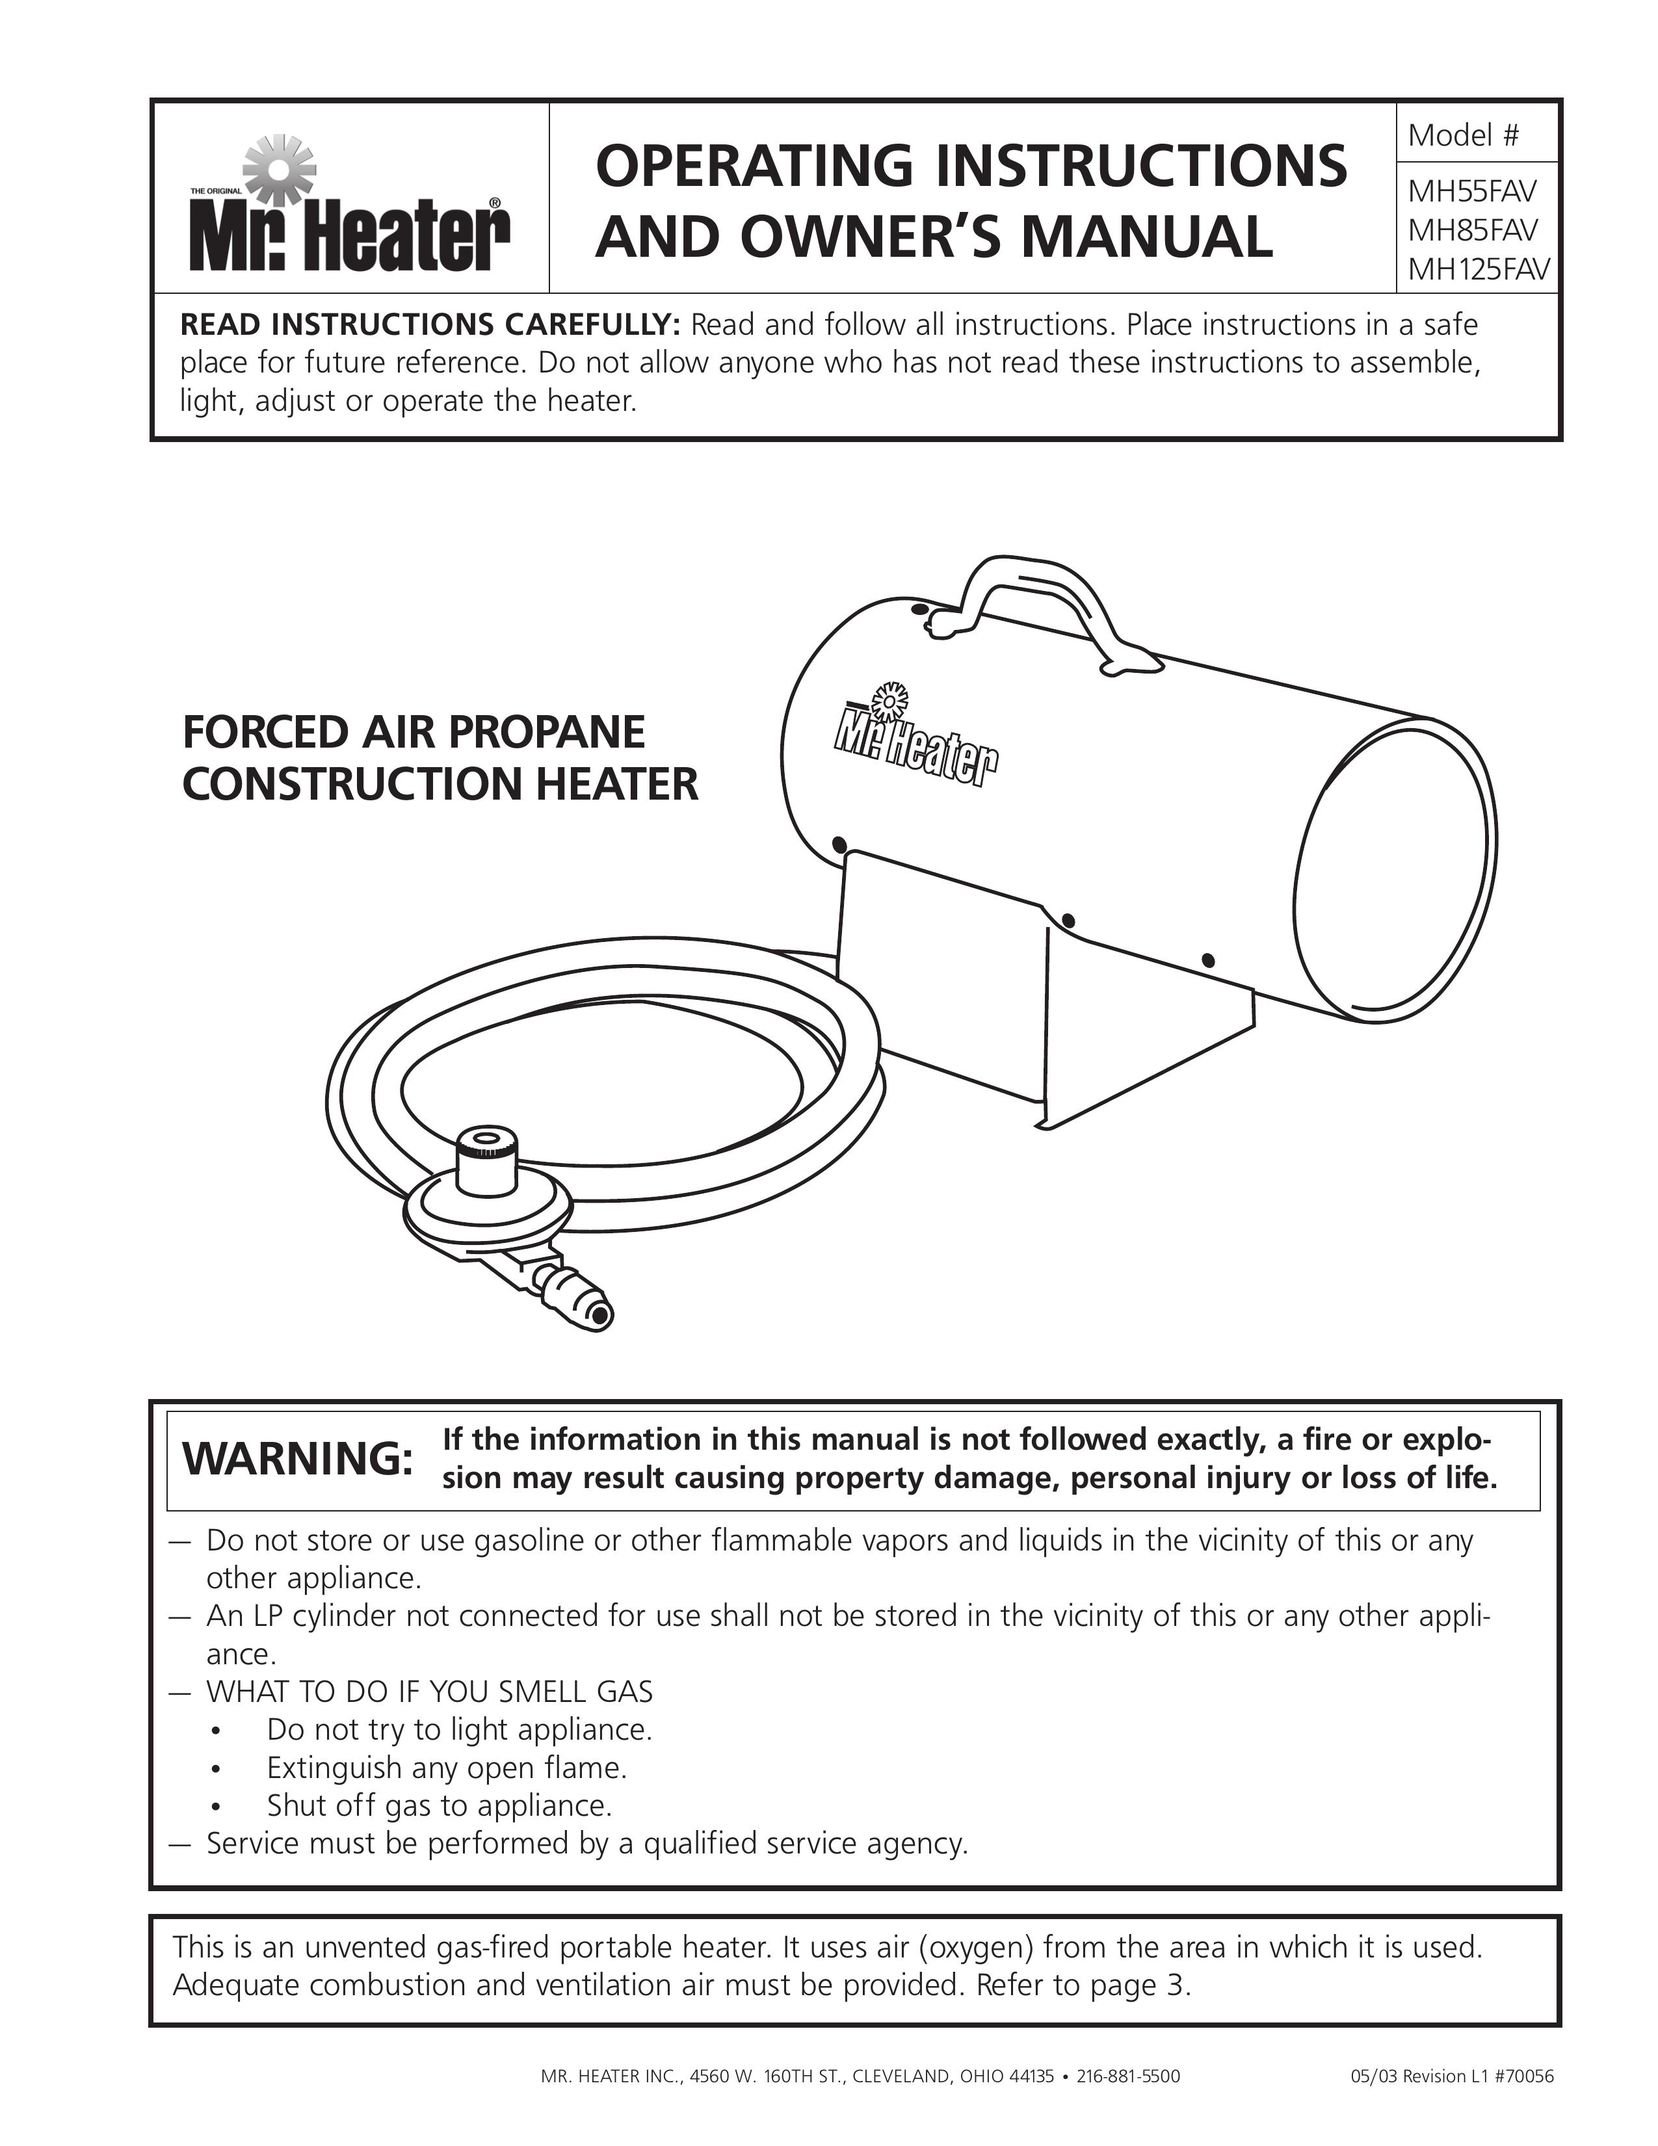 Enerco MH125FAV Electric Heater User Manual